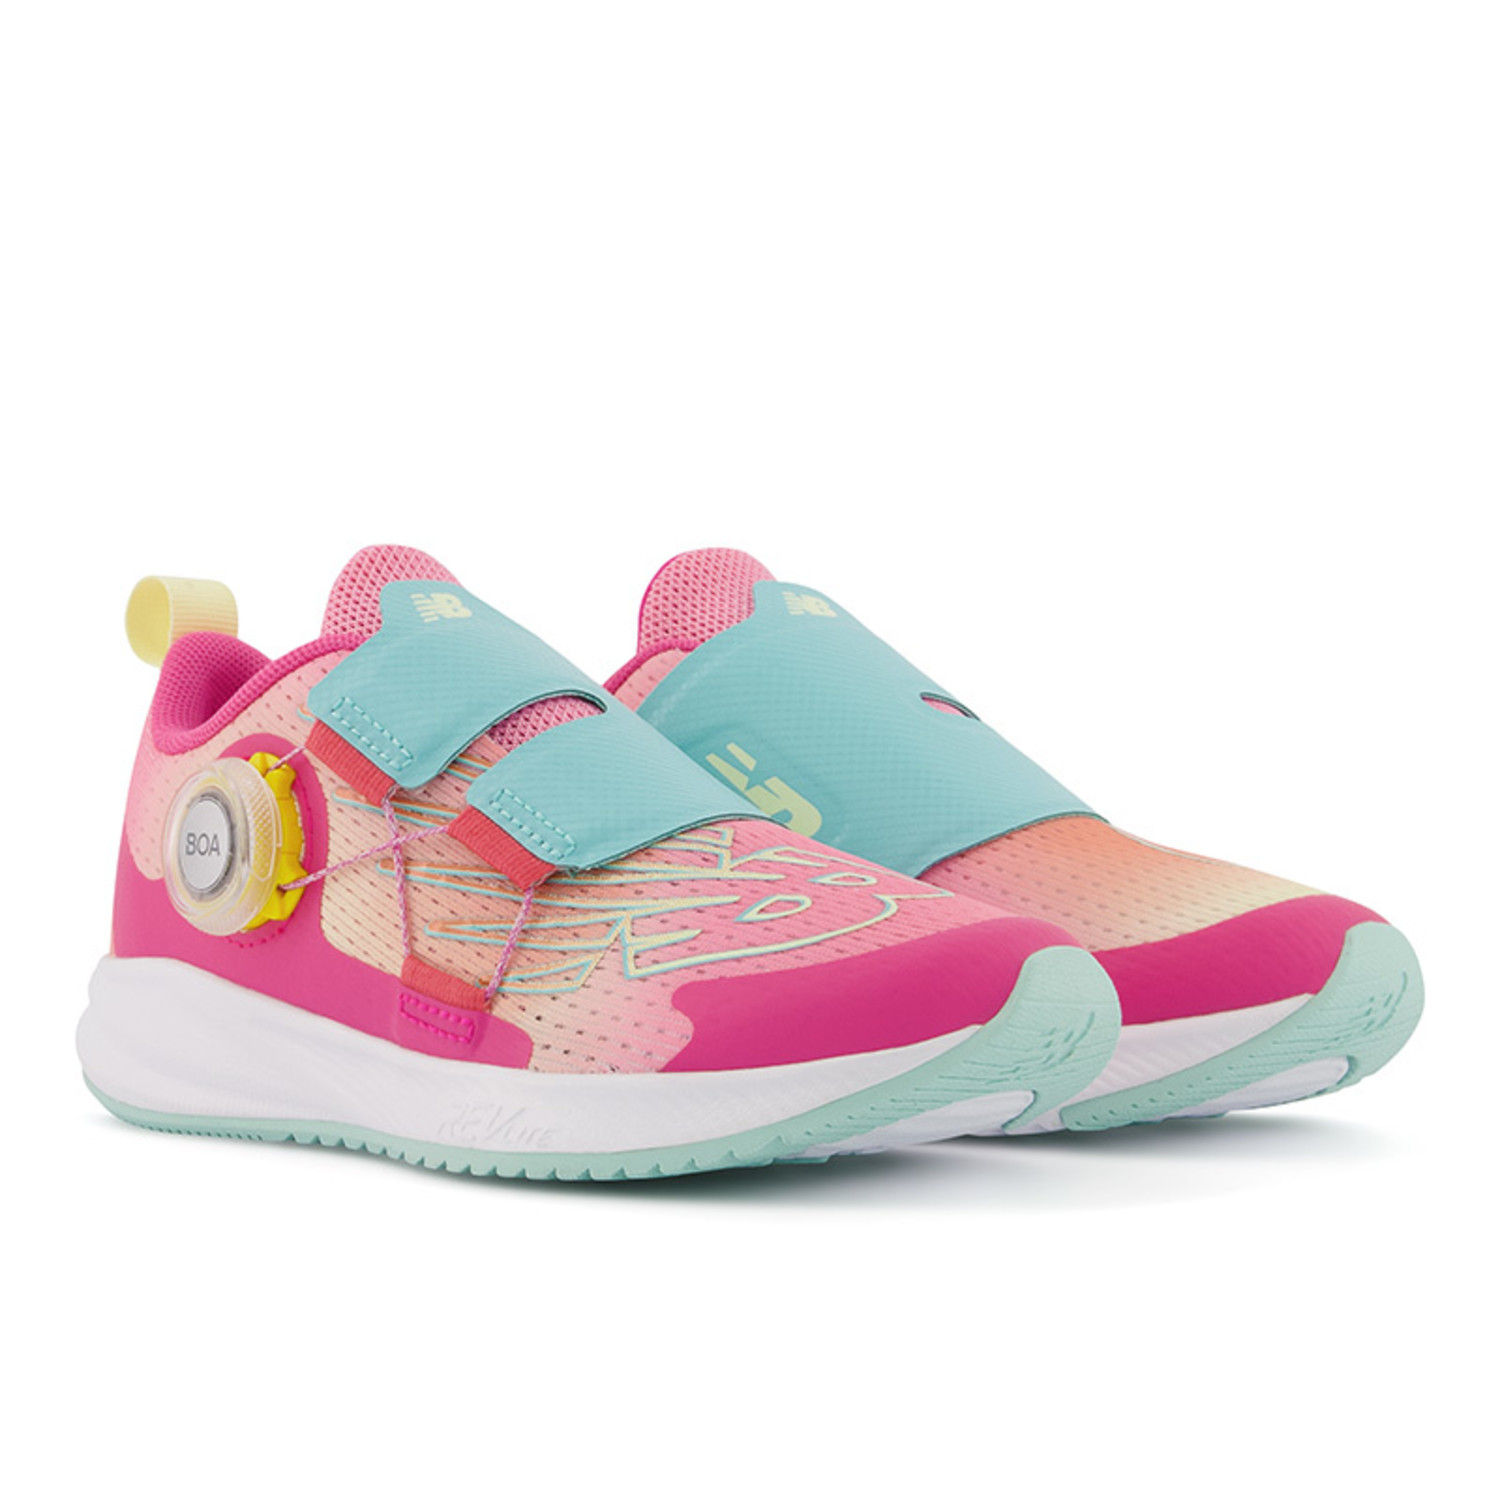 Balance Fuel Core Reveal BOA Hi-Pink - Kids Shoes in Canada - Kiddie Kobbler St Laurent